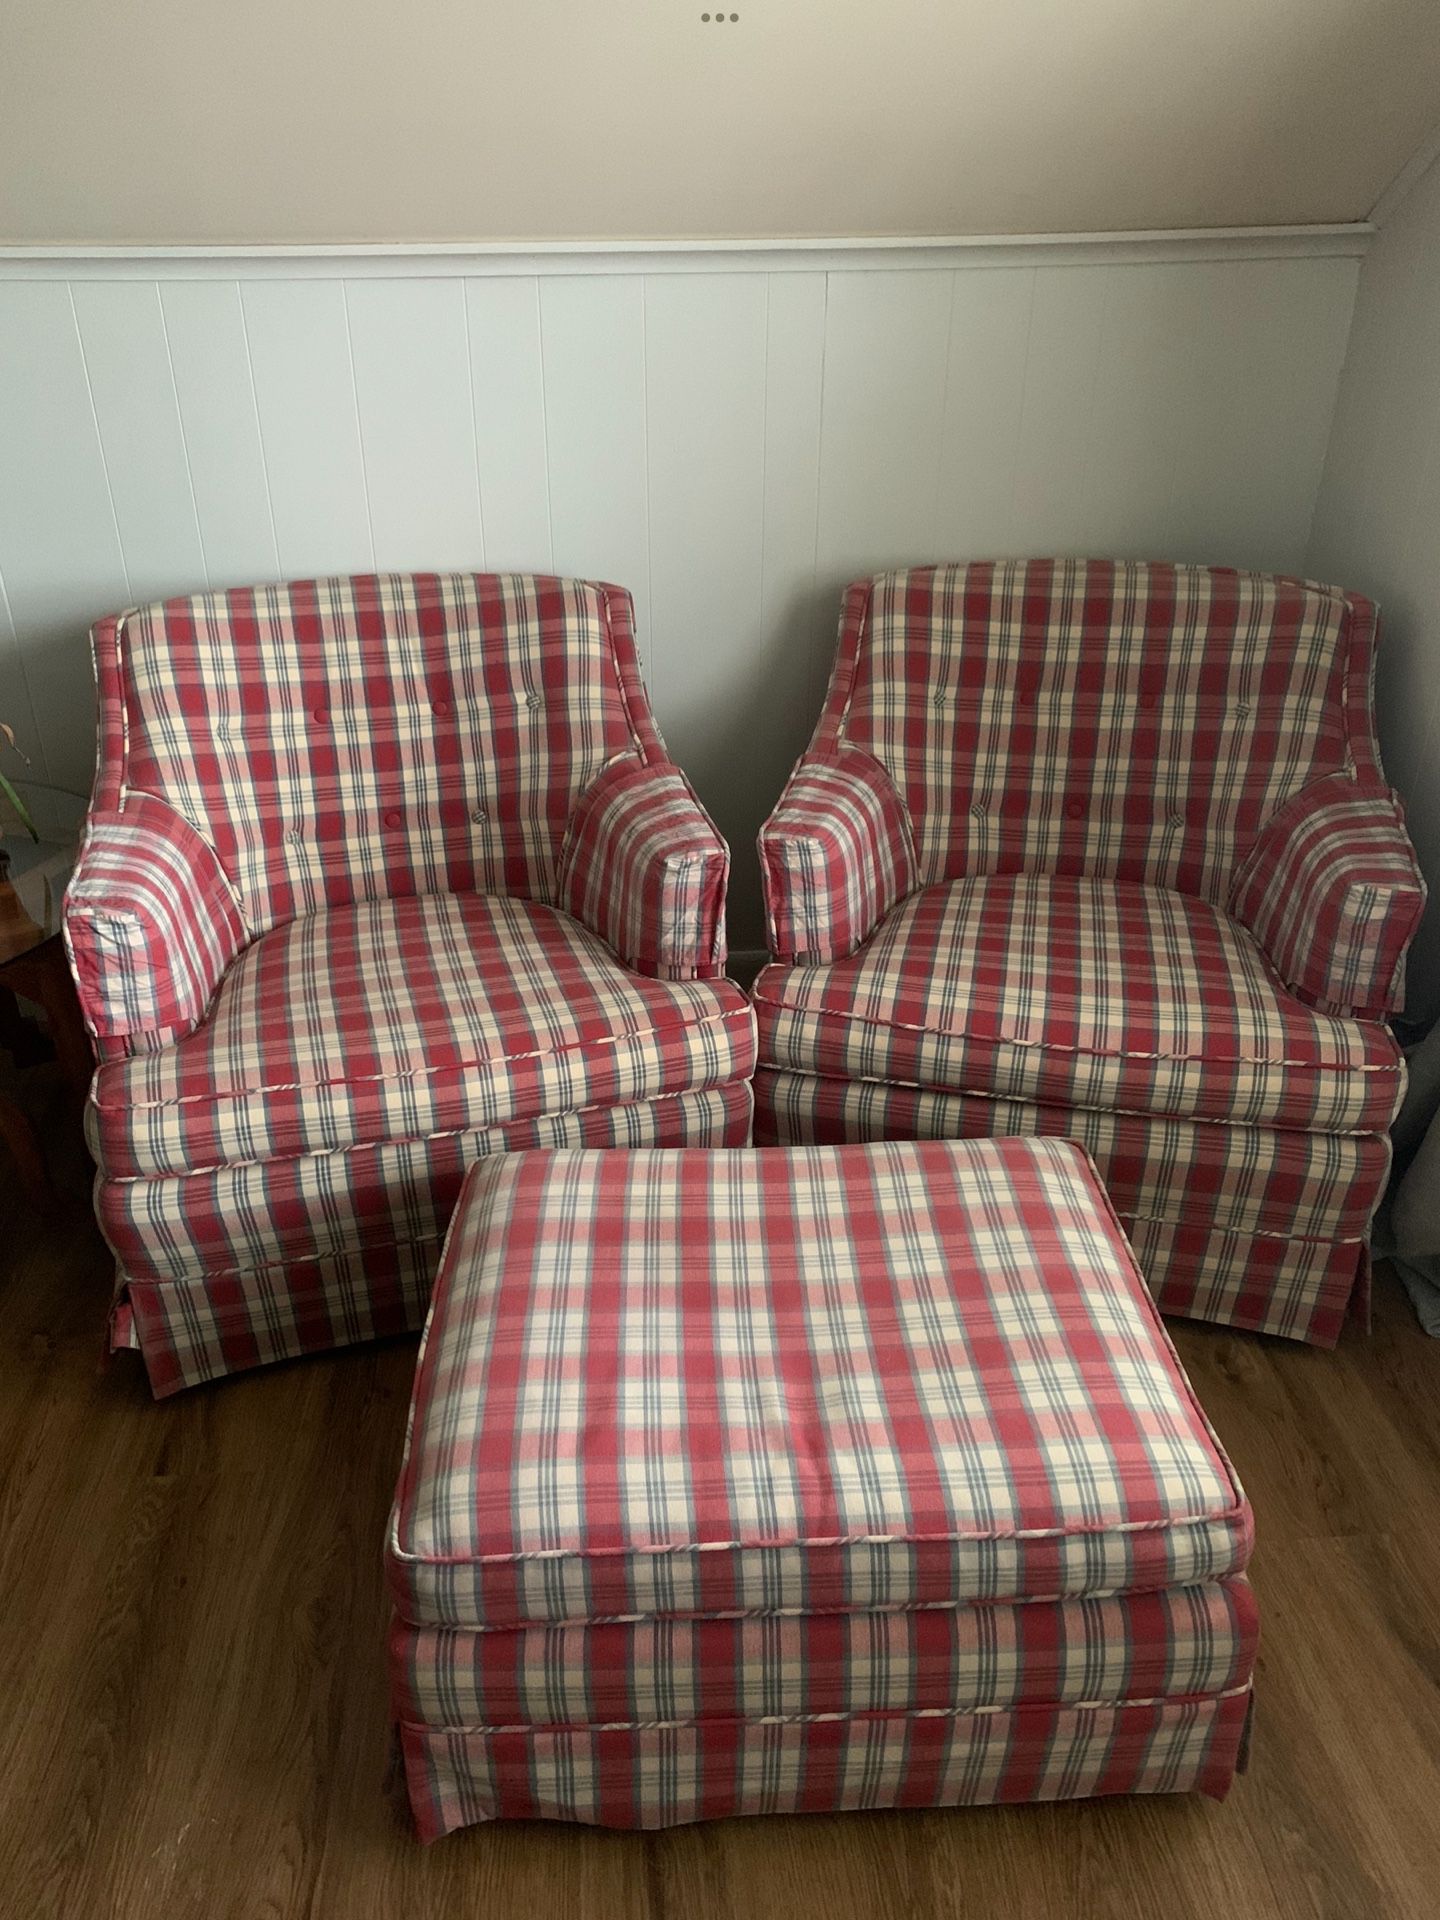 2 Red Plaid Vintage Chairs Plus Ottoman Excellent Condition 